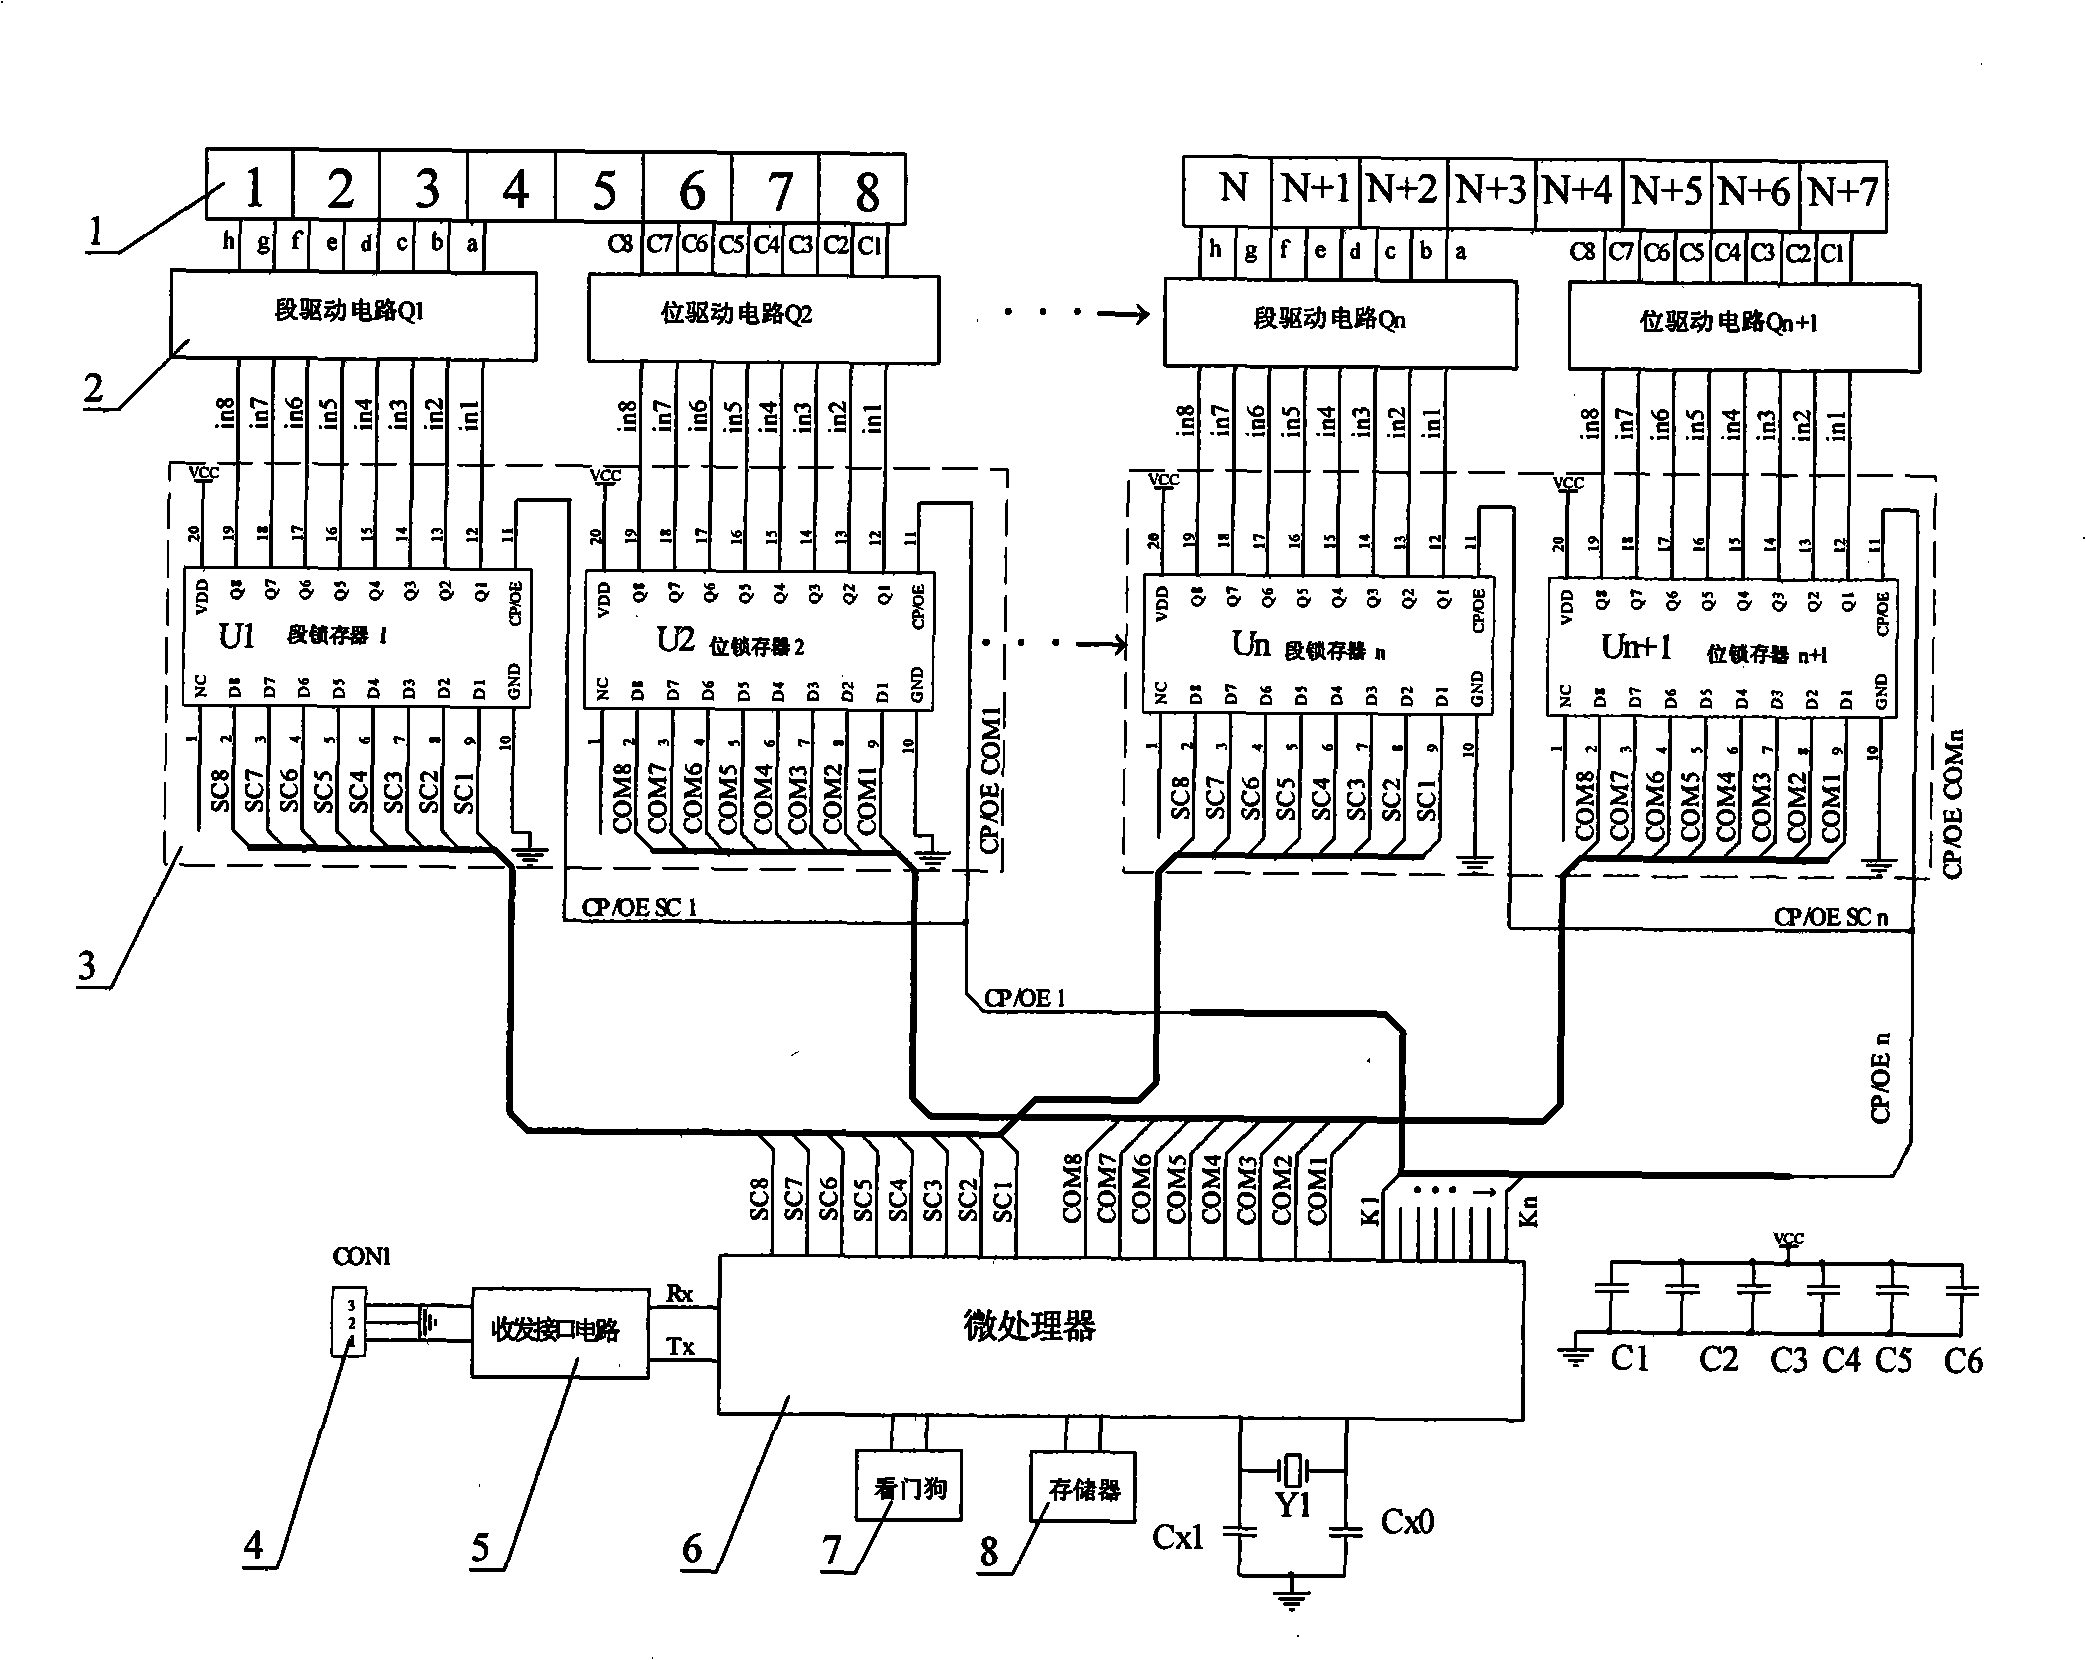 Multi-digit digital pipe control circuit and method thereof